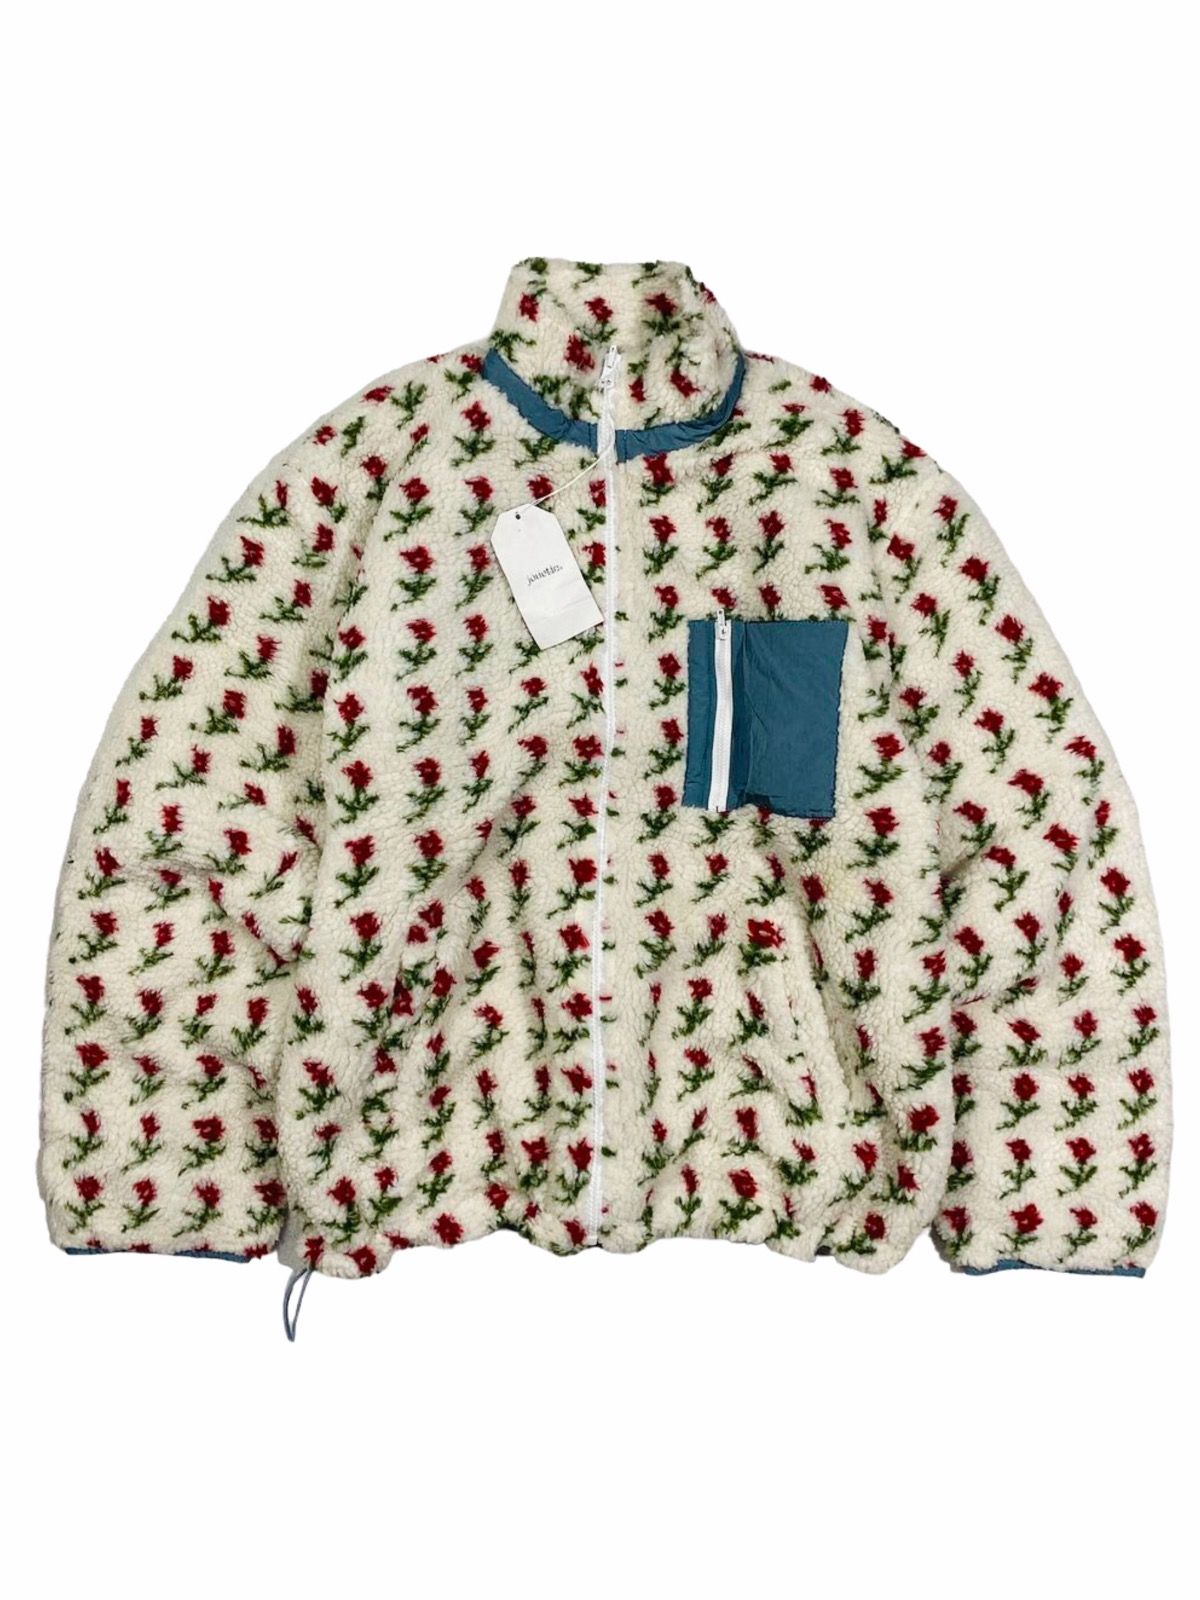 Japanese Brand 2000s Joutique Tokyo - Rose Reversible Sherpa Jacket Size US L / EU 52-54 / 3 - 1 Preview